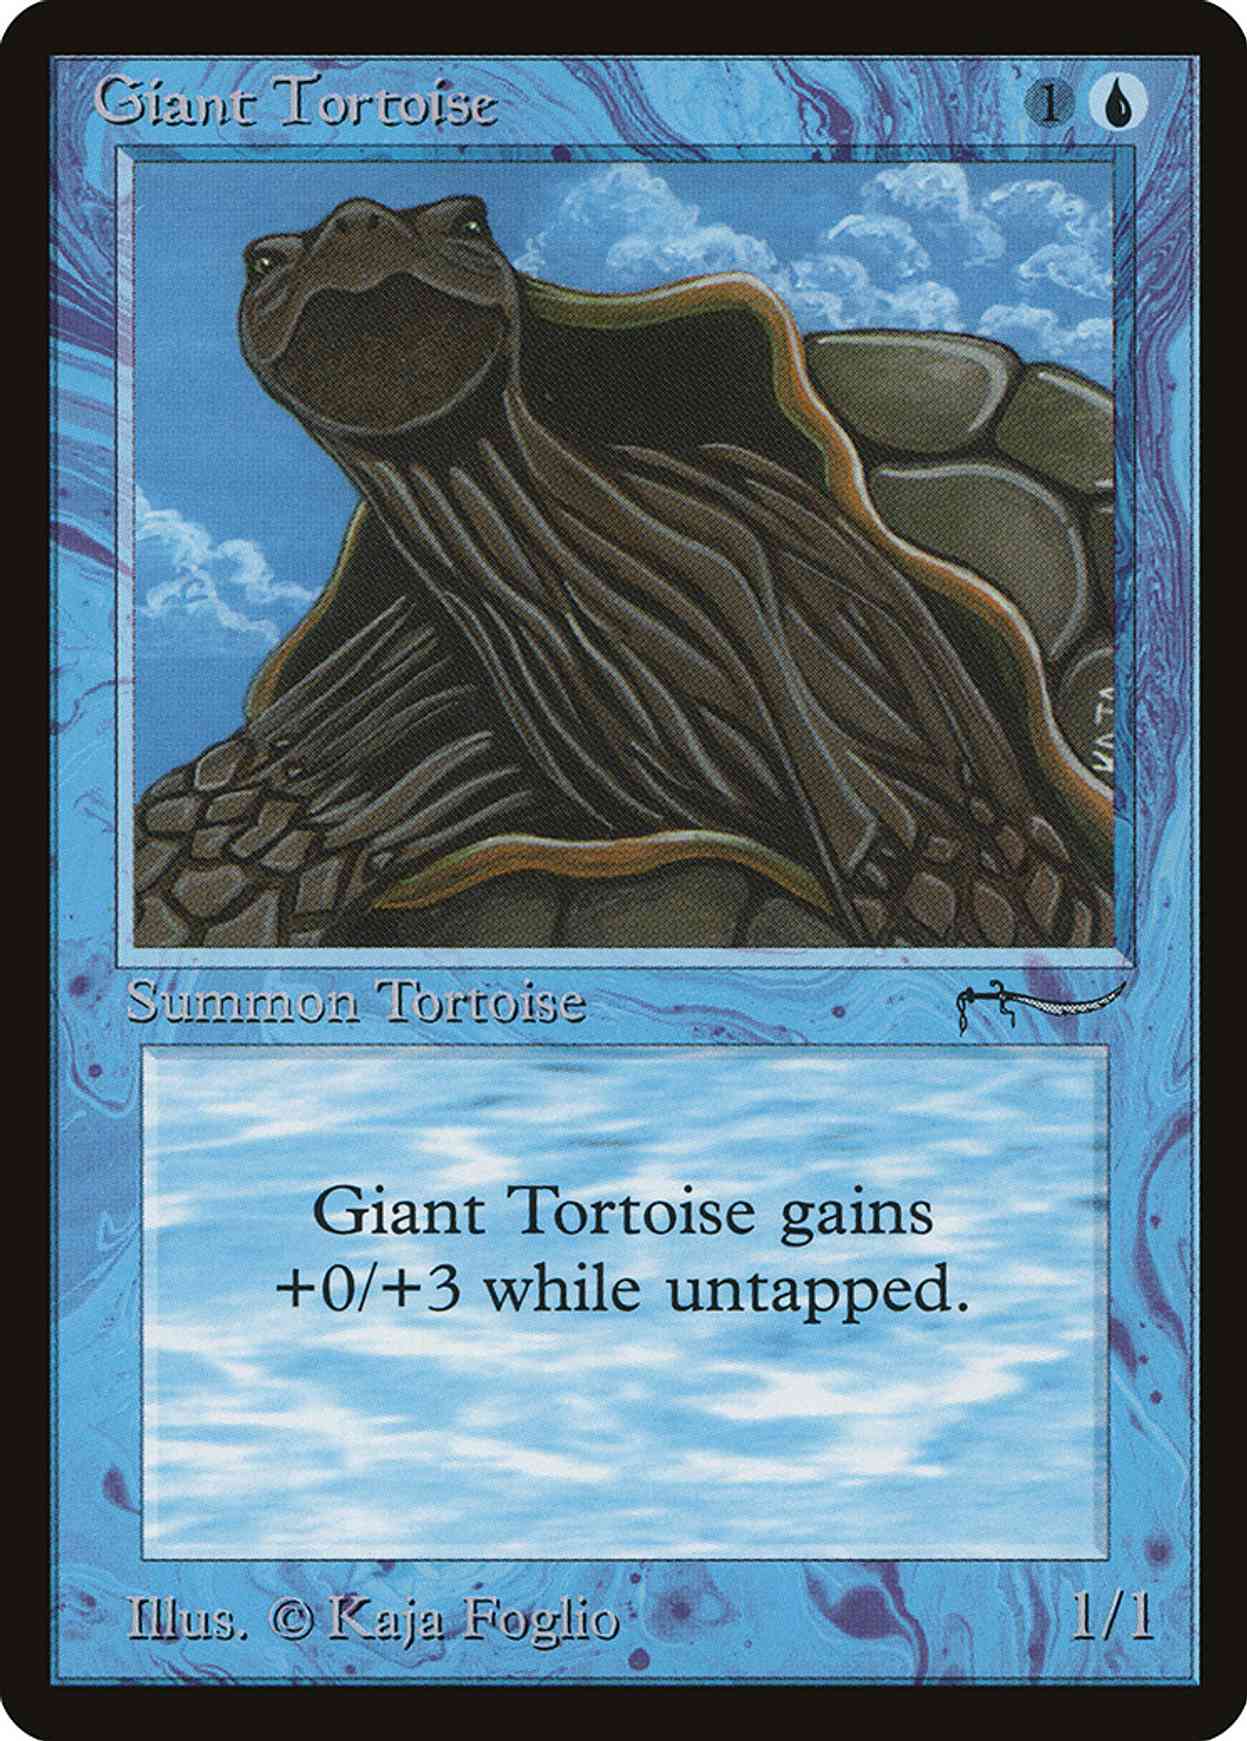 Giant Tortoise magic card front